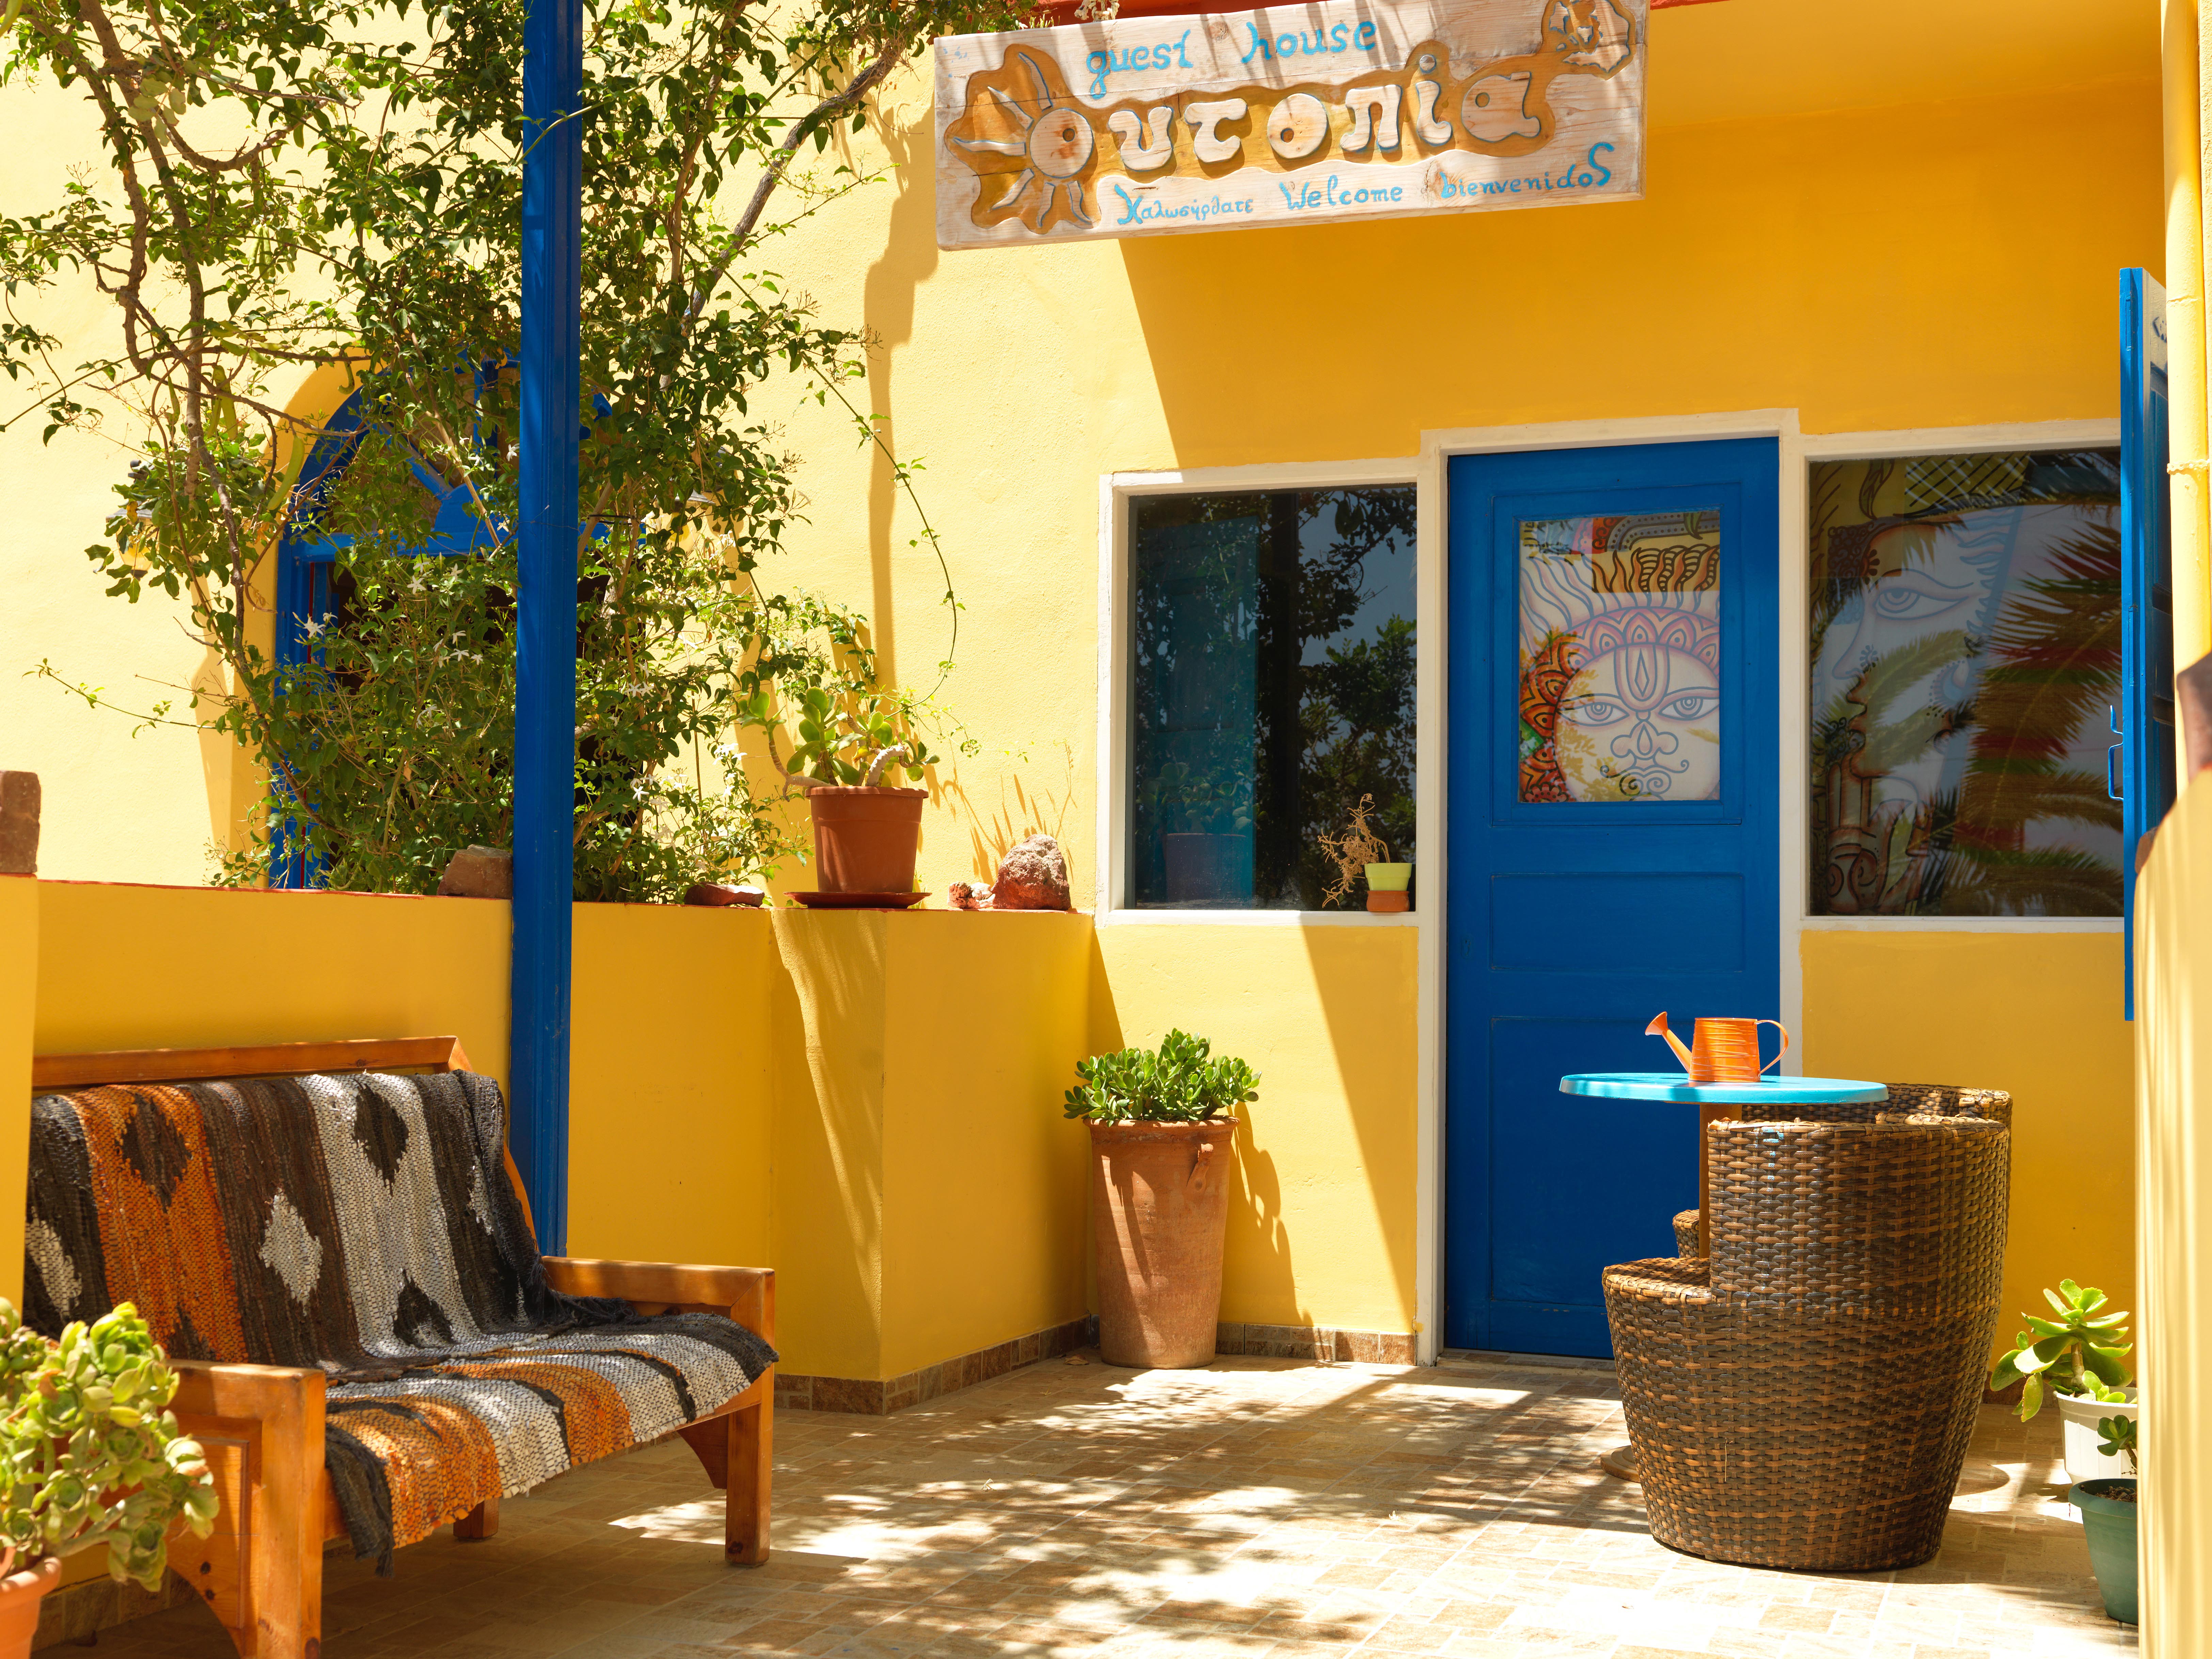 Santorini Utopia guesthouse